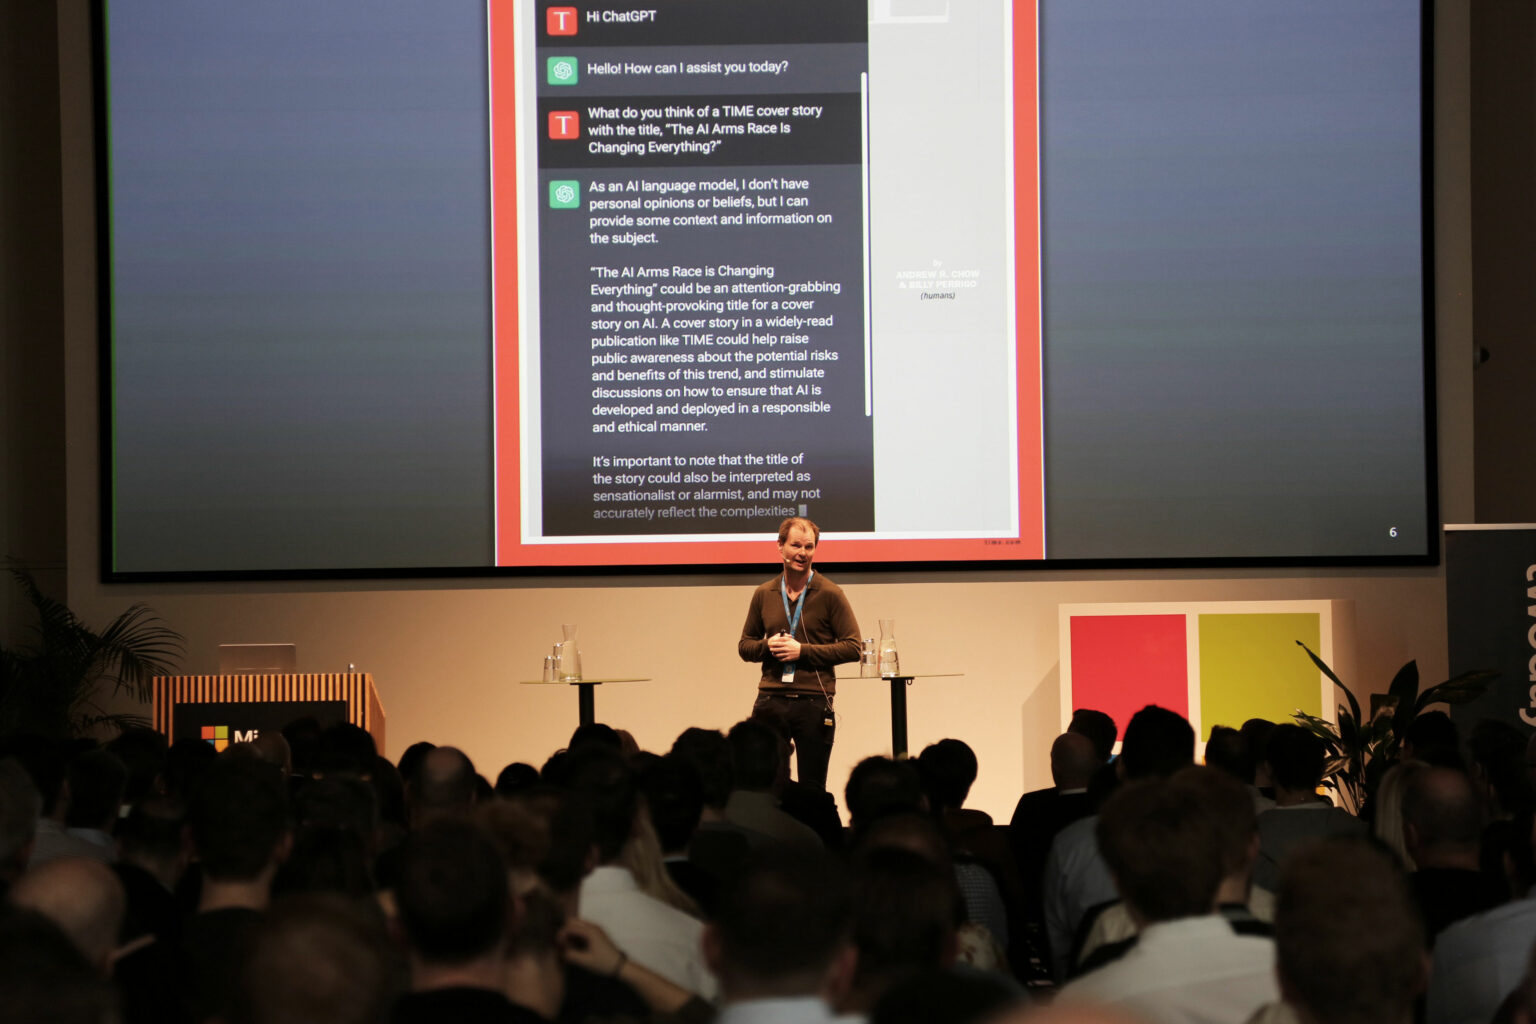 A man presenting at Microsoft Denmark